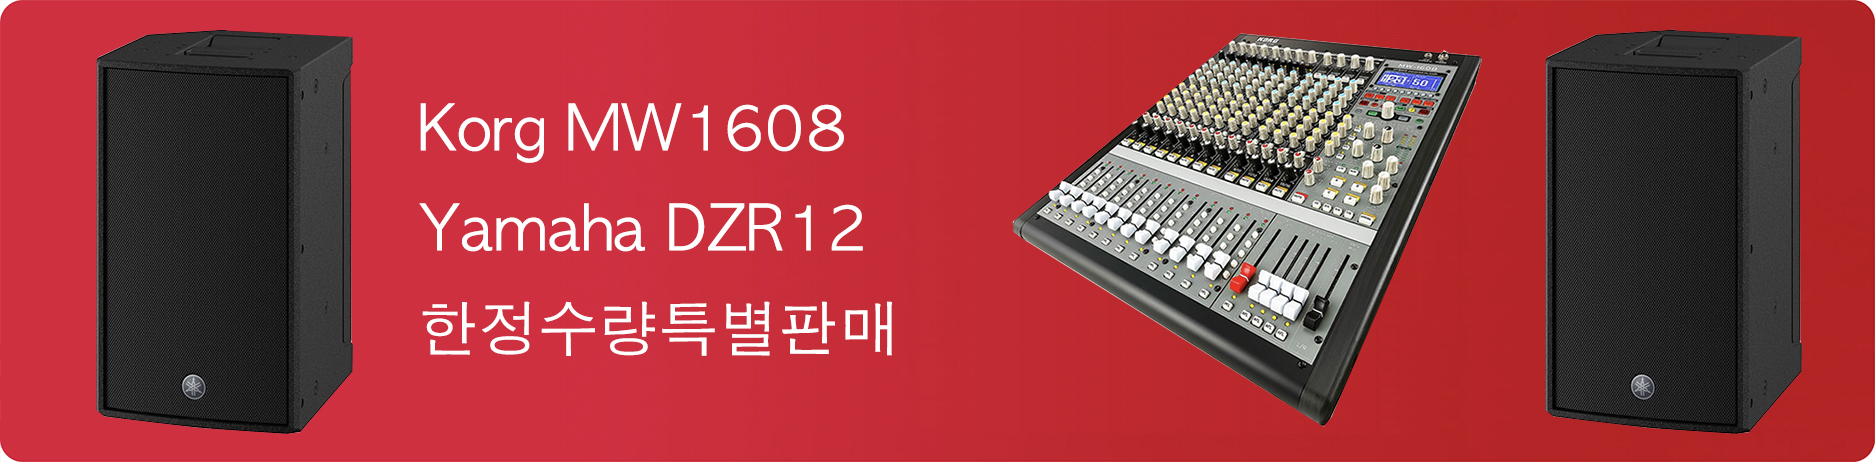 Korg MW1608 + Yamaha DZR12 1조2개 특별판매